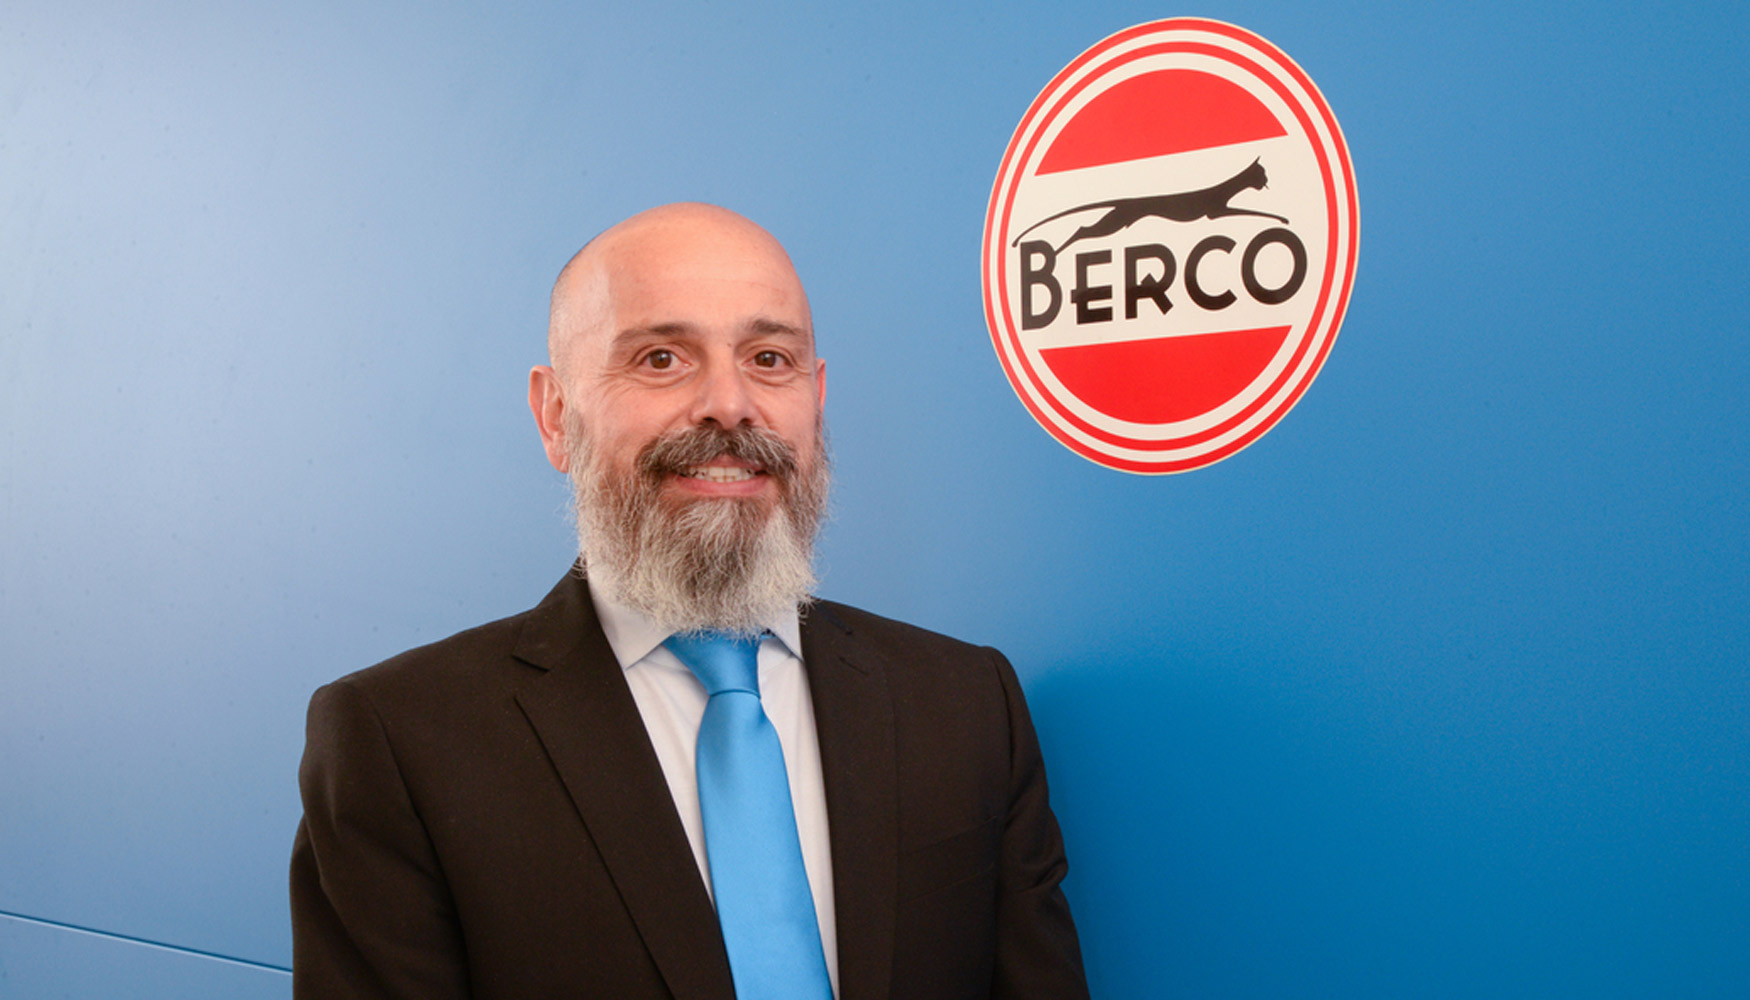 Fedele Salvatore, Head of Sales OEM Europe de Berco